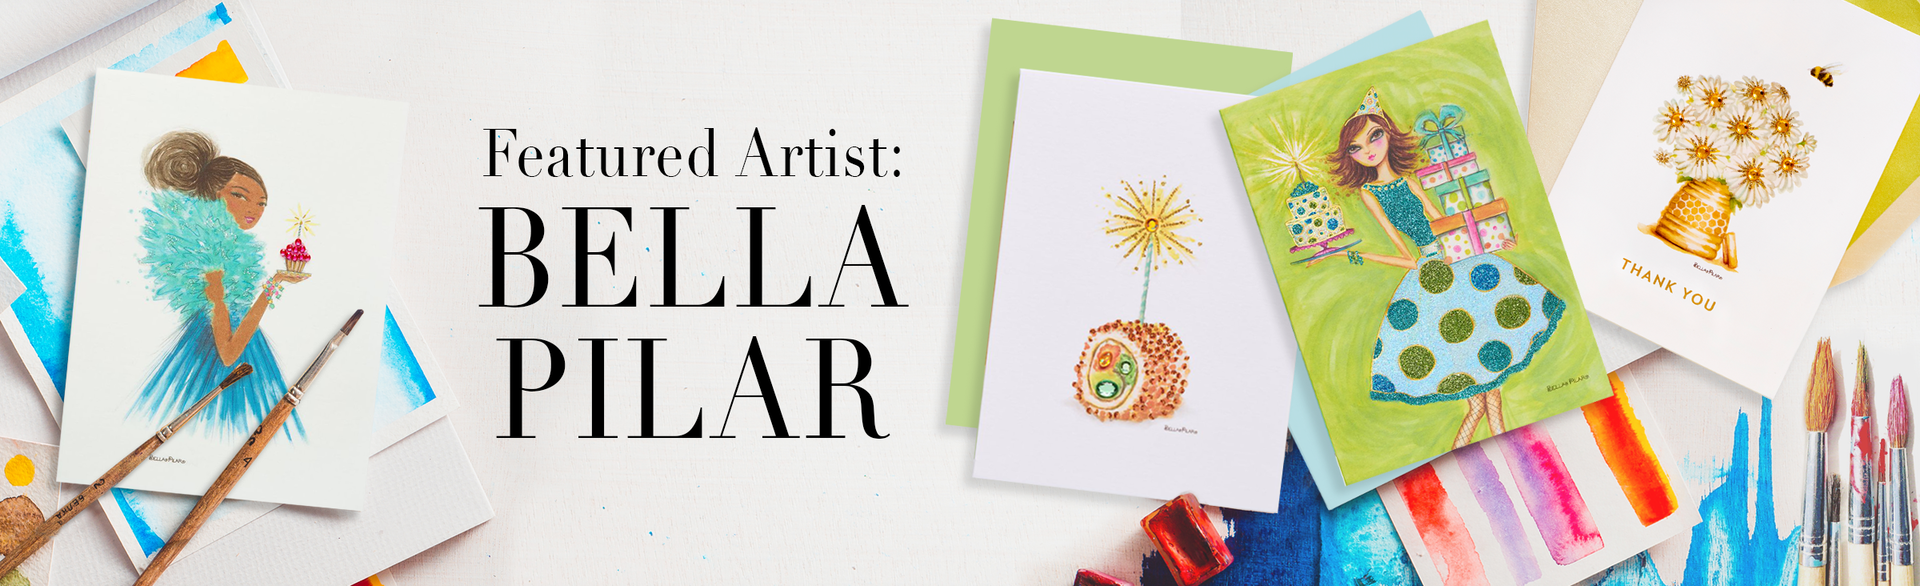 Bella Pilar Woman with Cupcake Card on Watercolor Art Pad